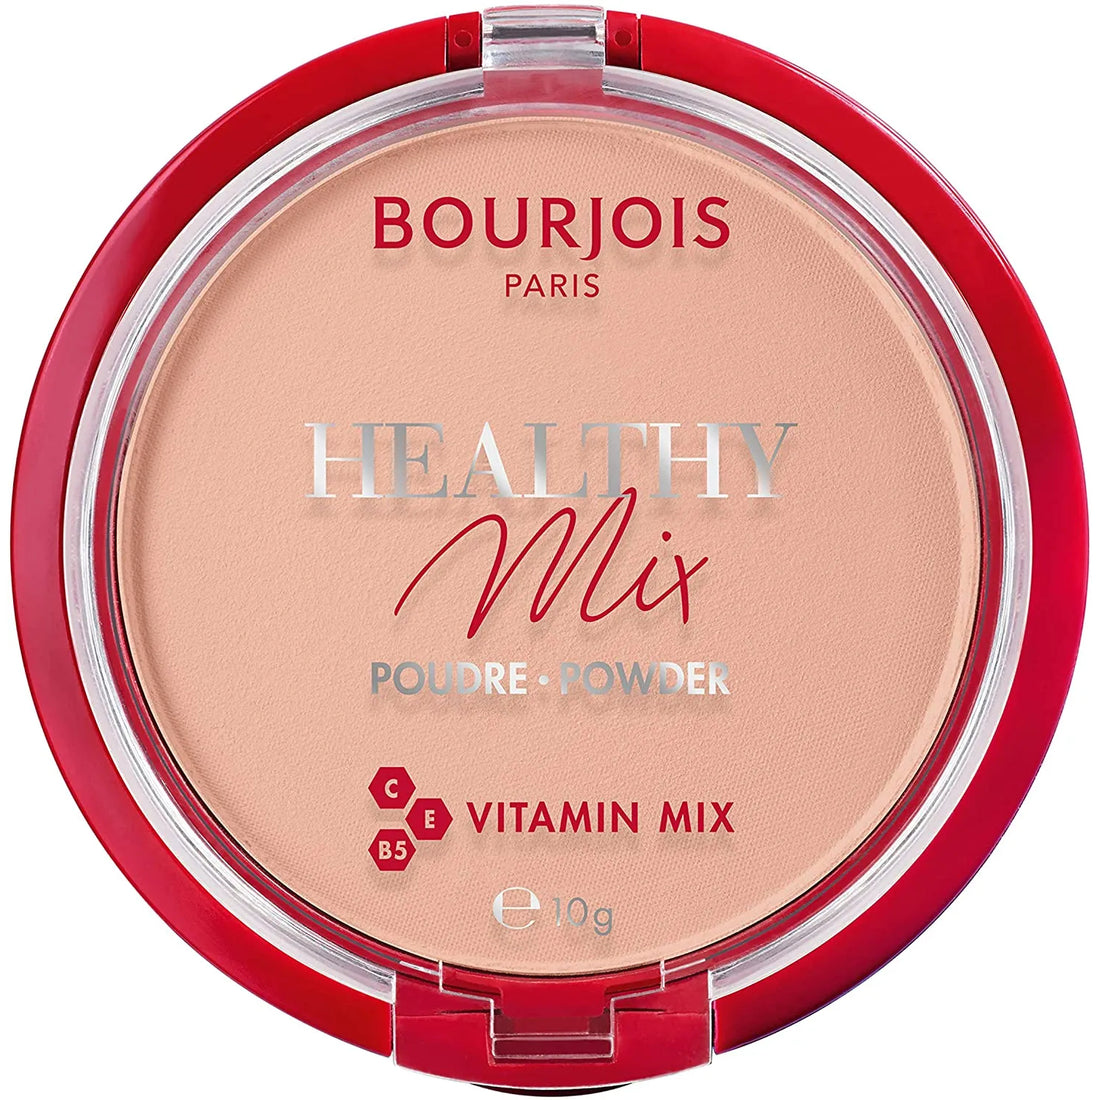 Bourjois Healthy Mix Powders